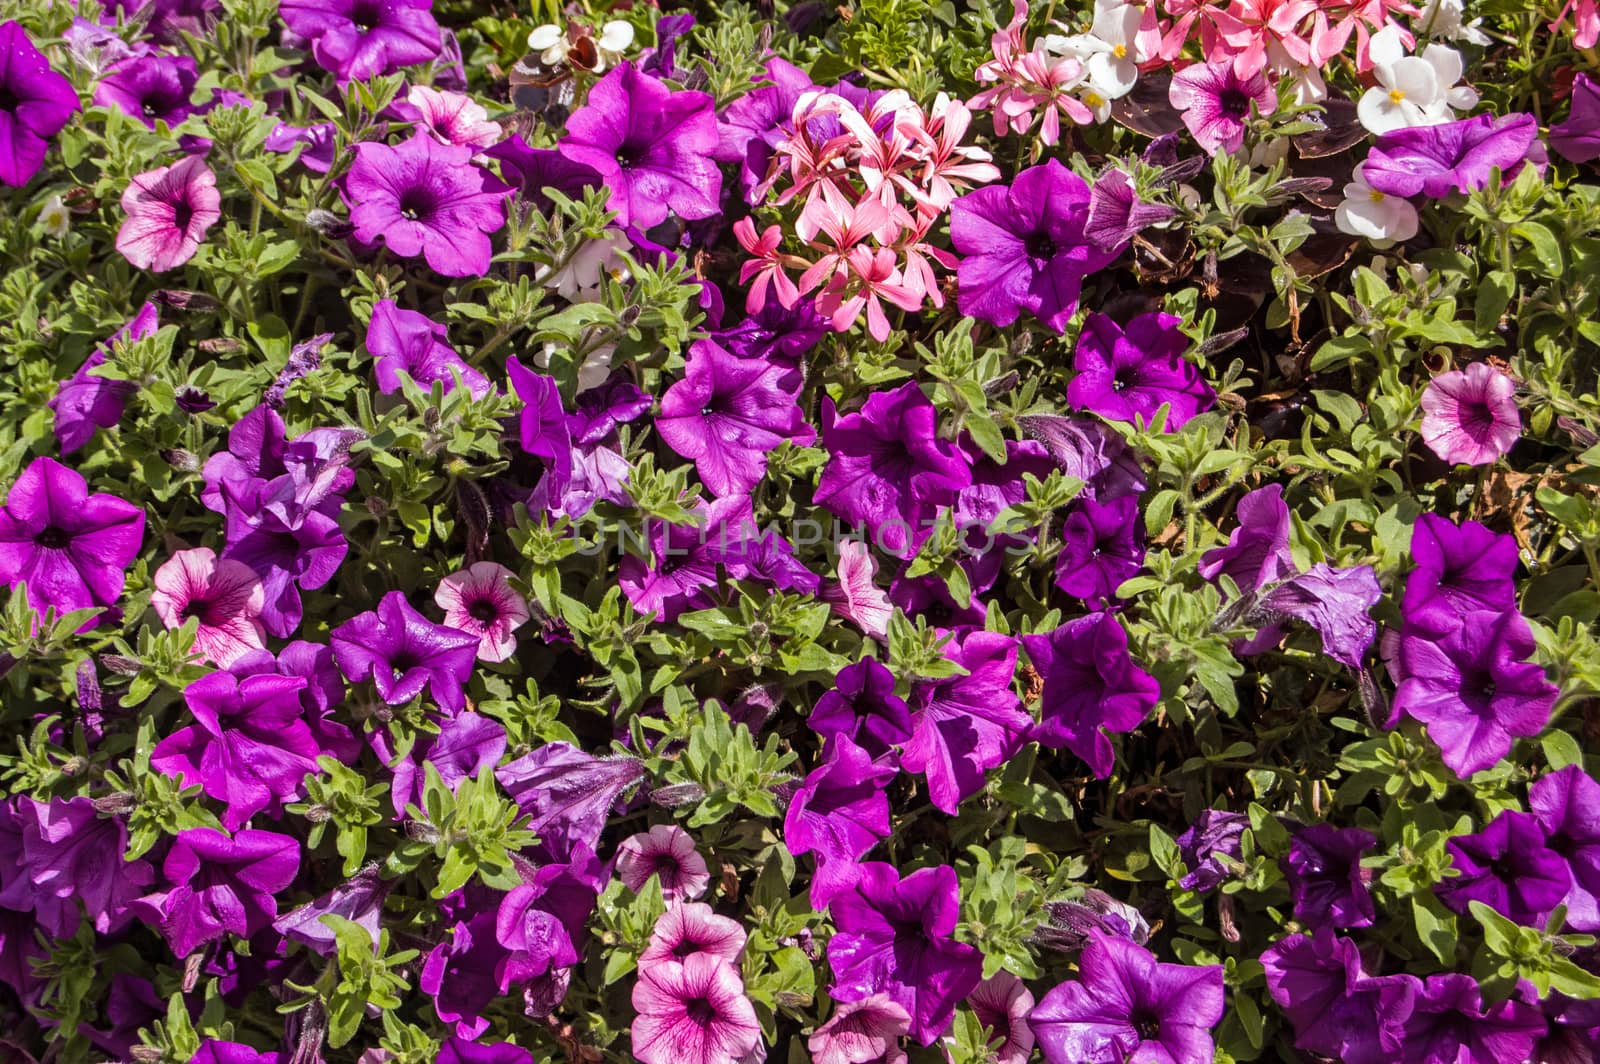 Purple Petunias background by BasPhoto